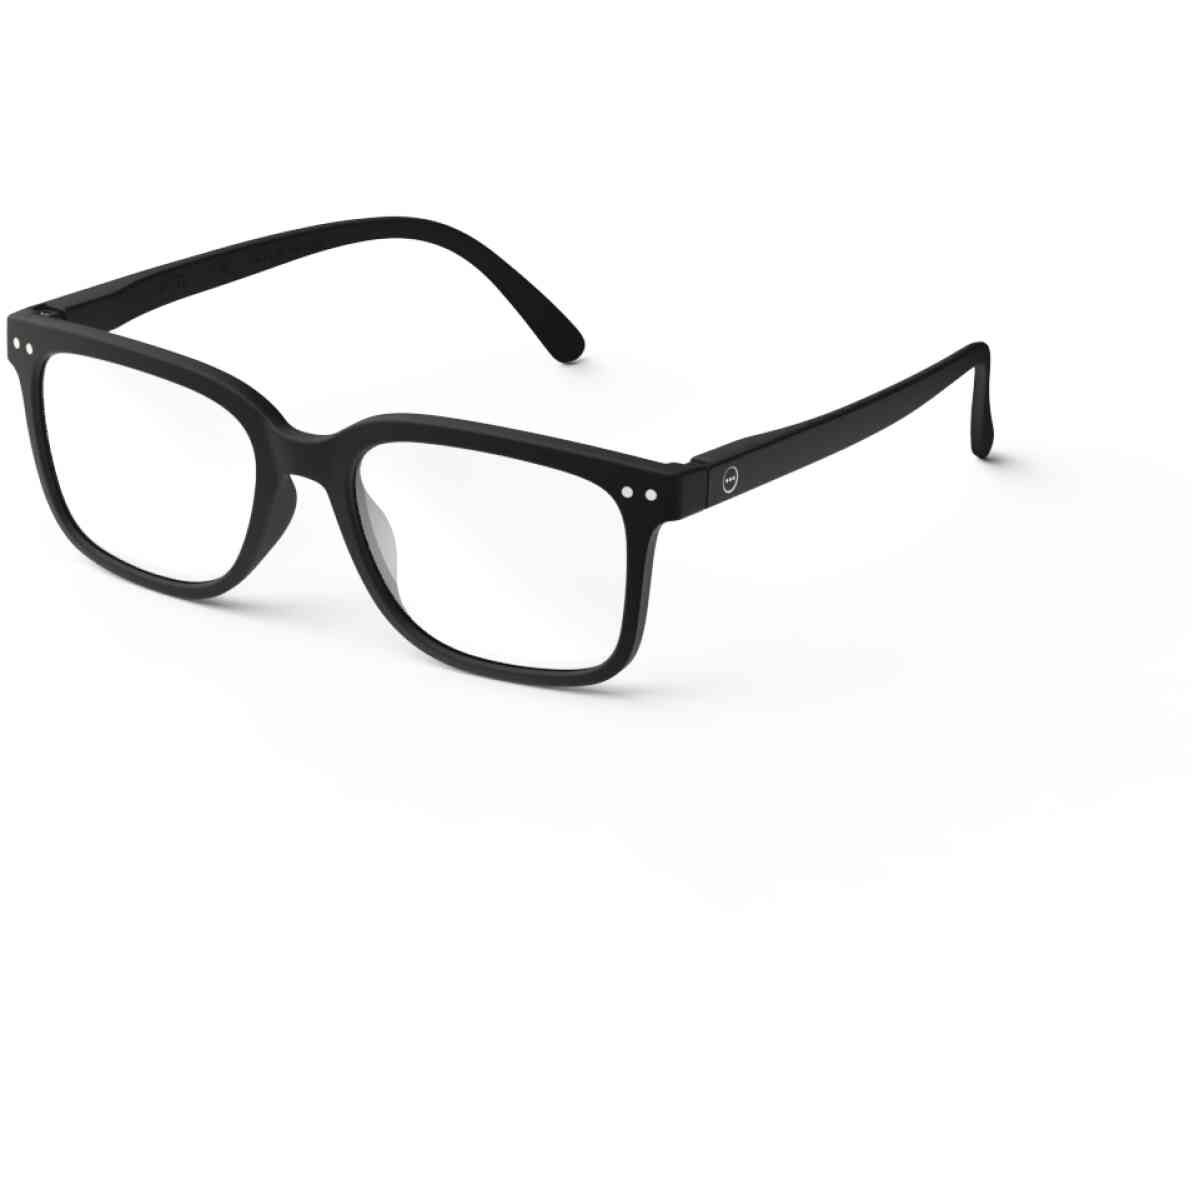 l black reading glasses 2